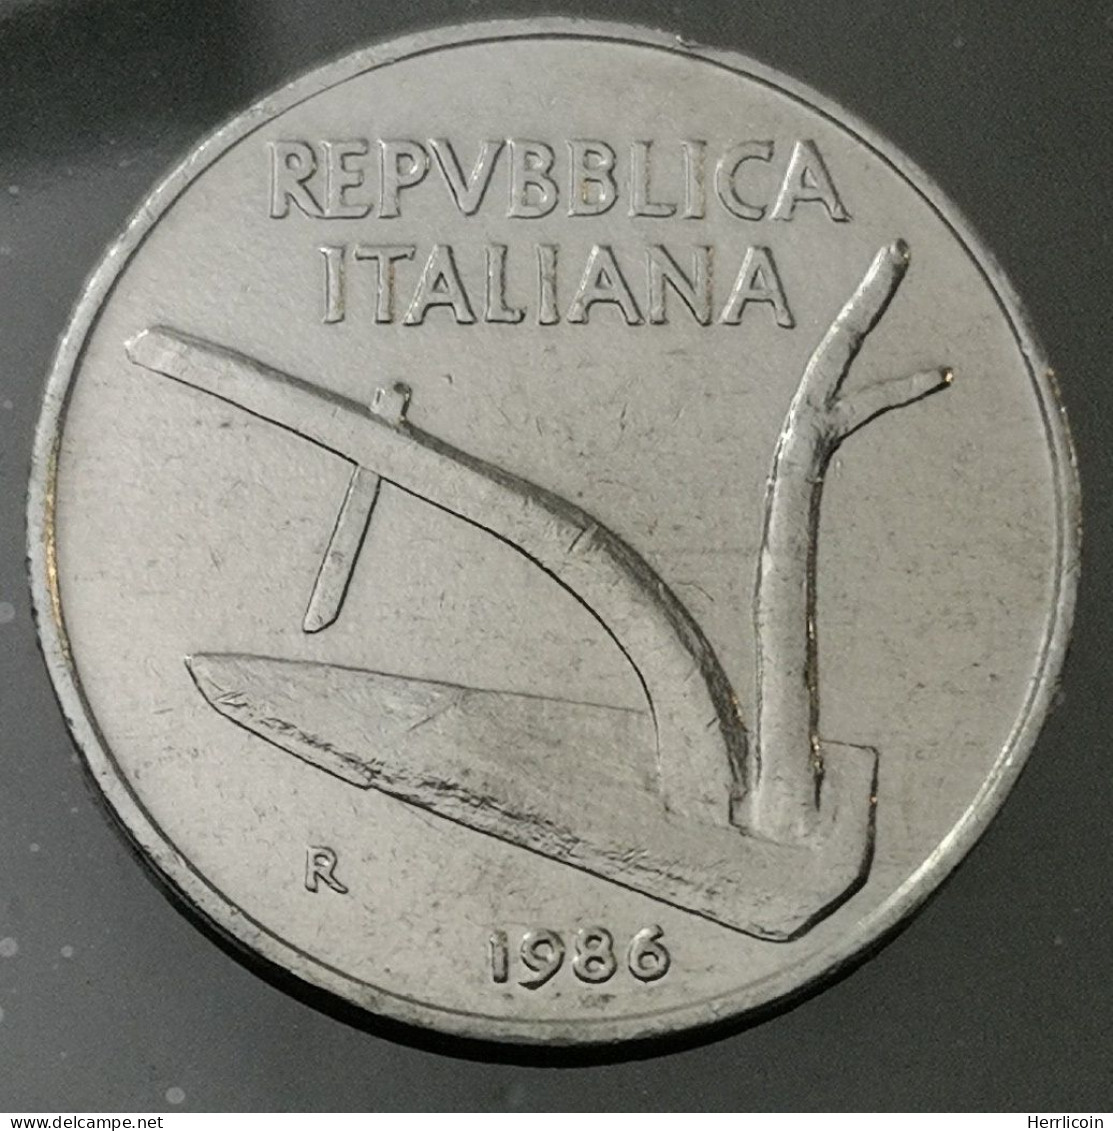 Monnaie Italie - 1986 R  - 10 Lire - 10 Lire